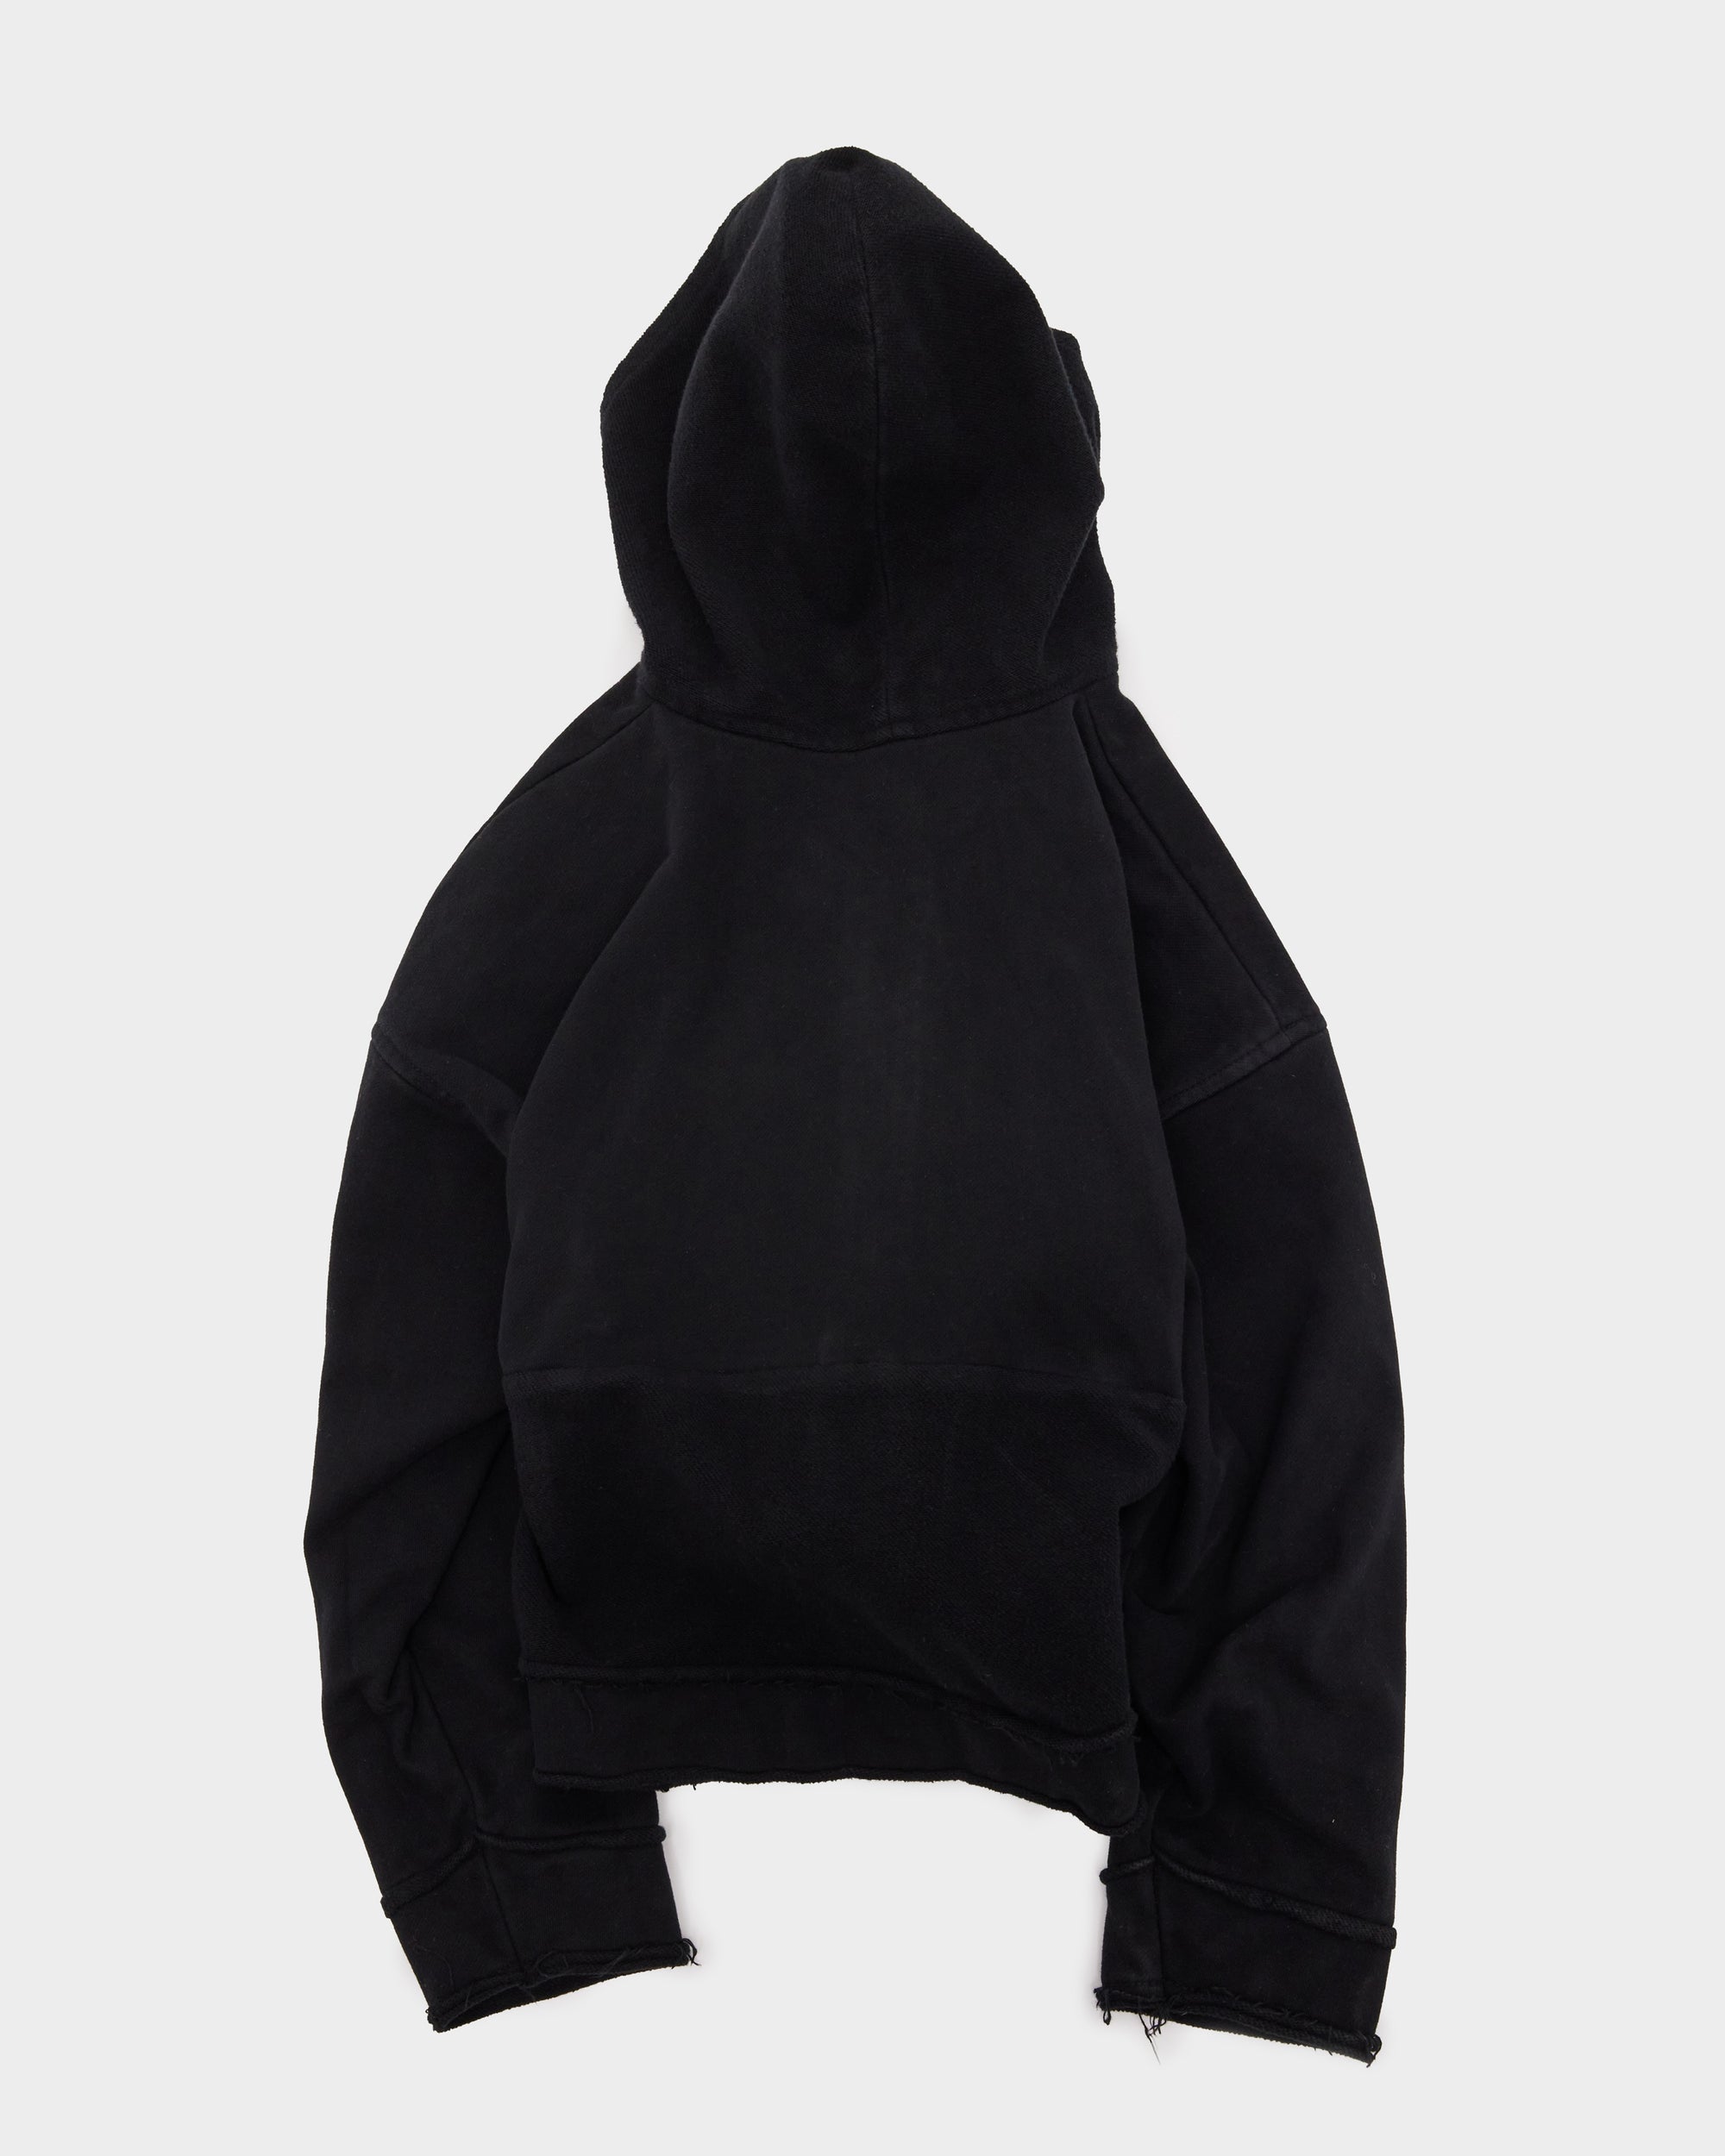 Midnight black hoodie